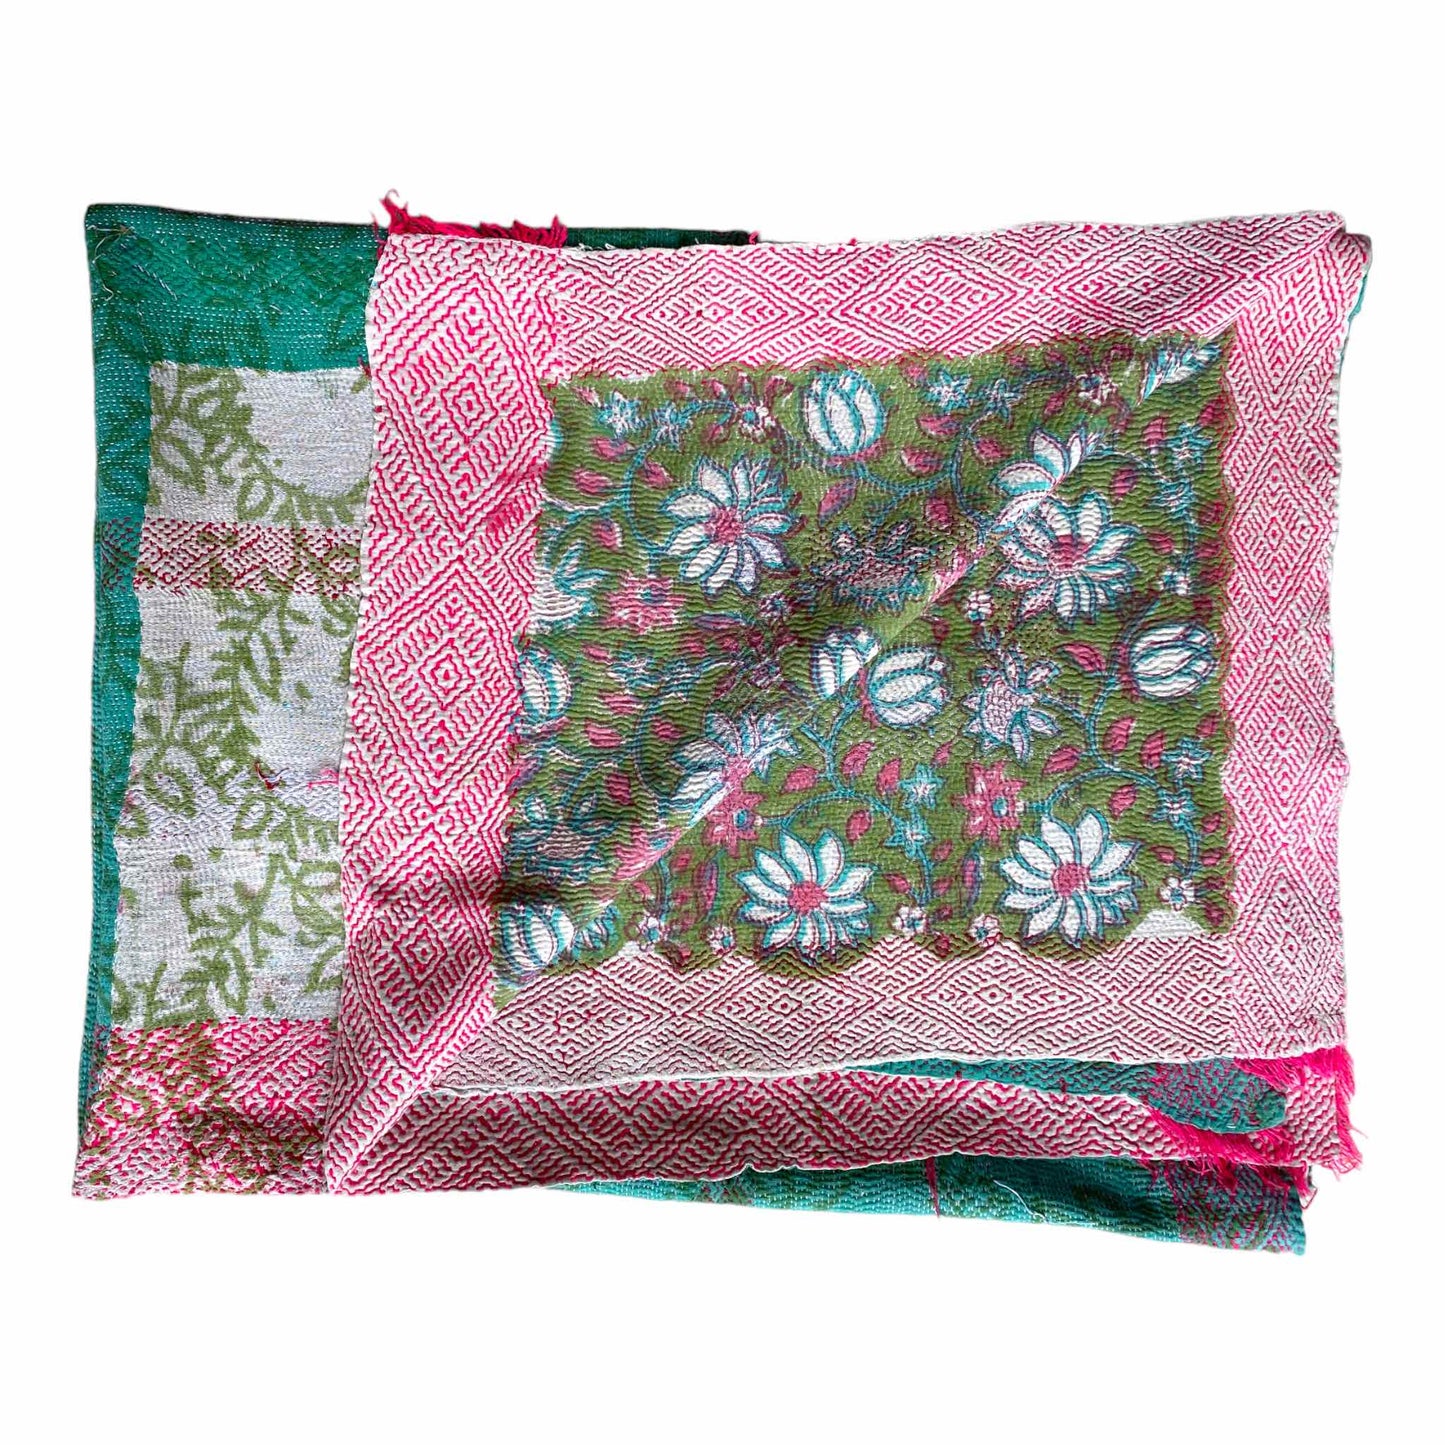 Green and pink block print kantha folded